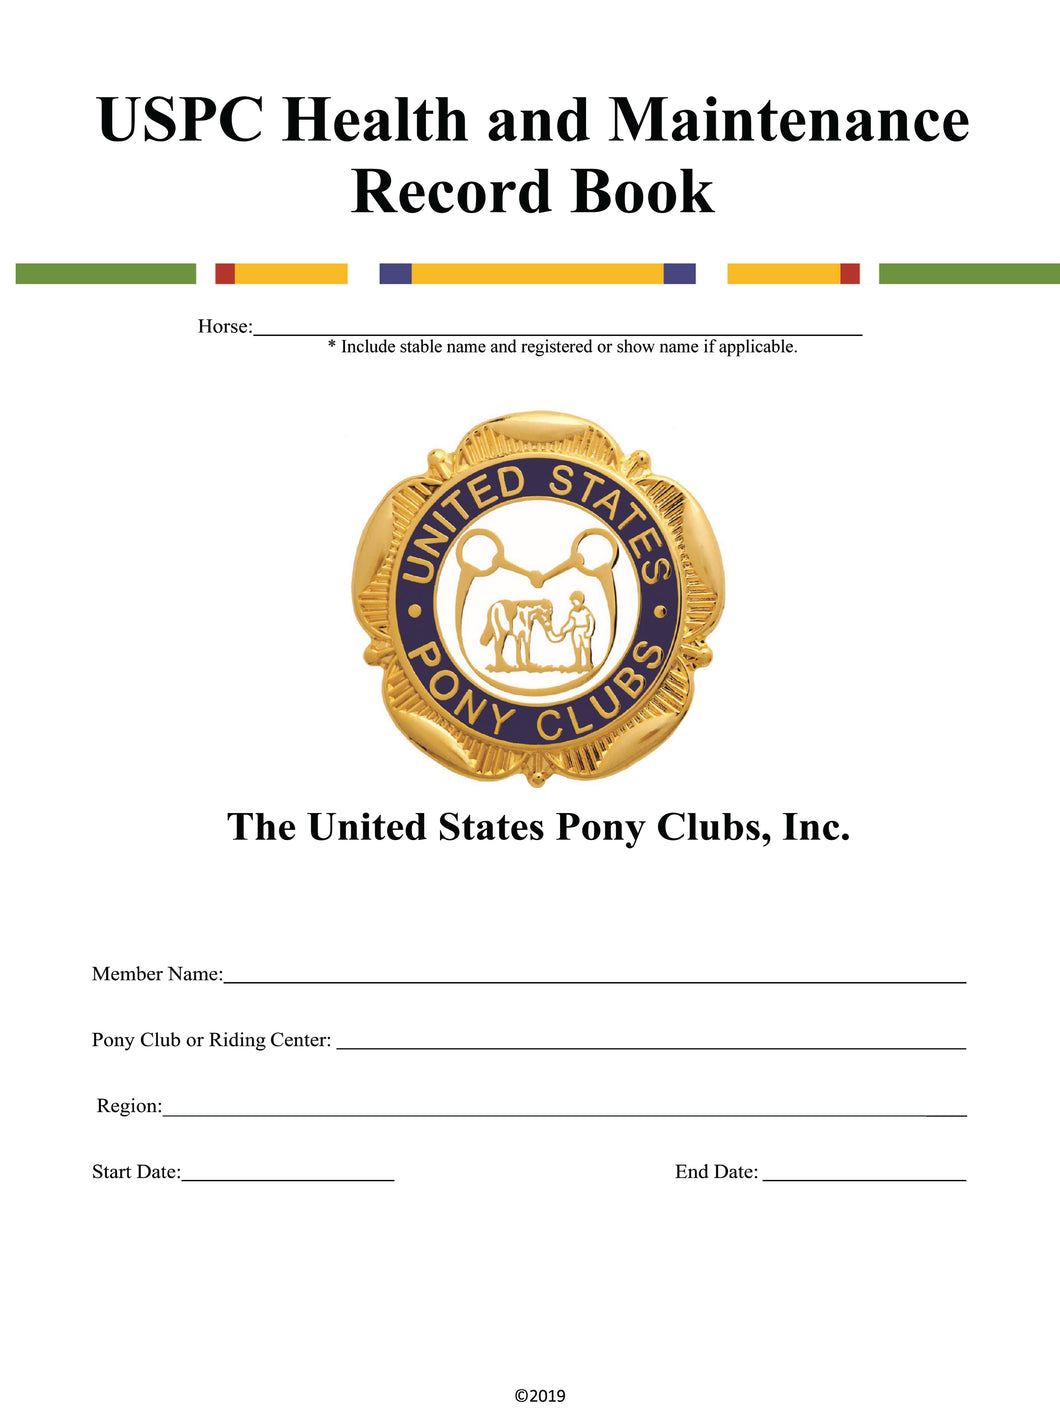 USPC Health and Maintenance Record Book